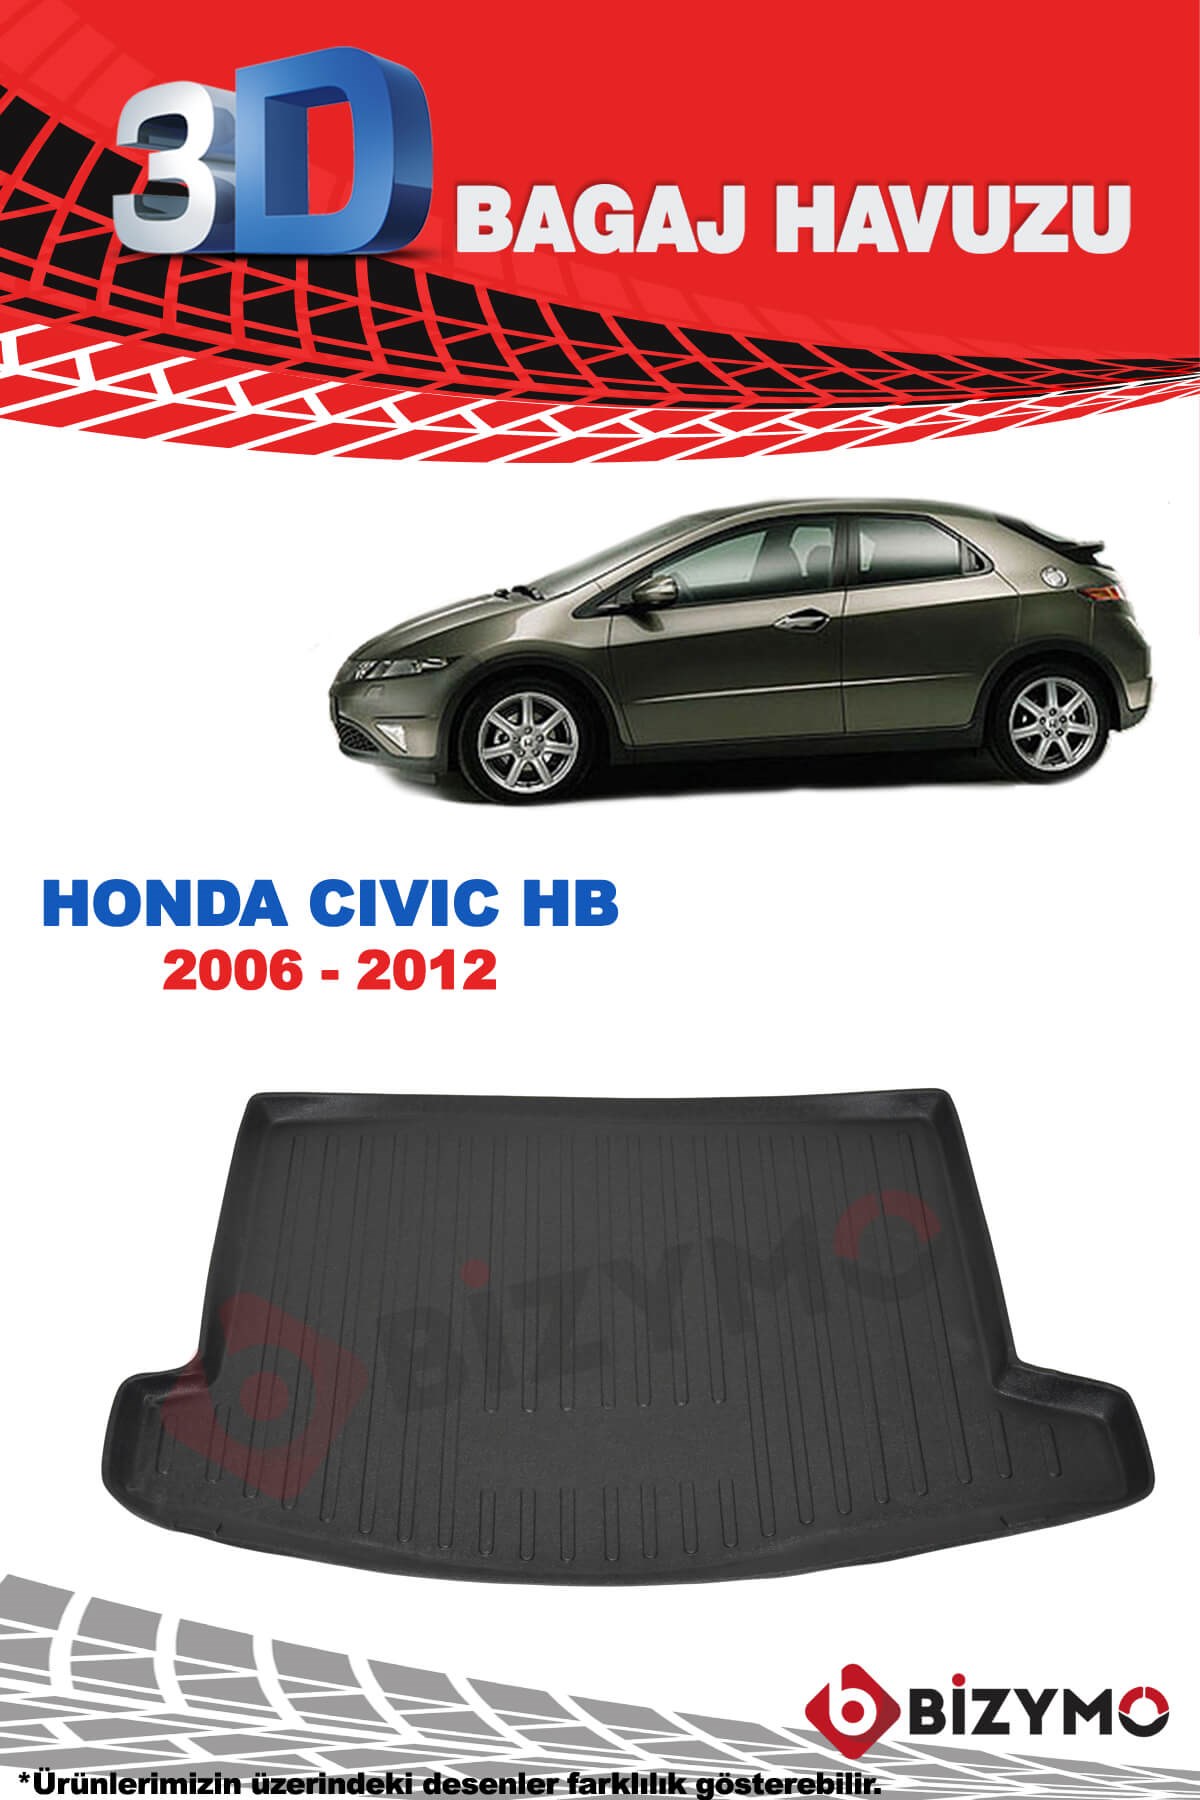 Honda Civic Hb 2006-2012 3D Bagaj Havuzu Bizymo - Bizim Oto